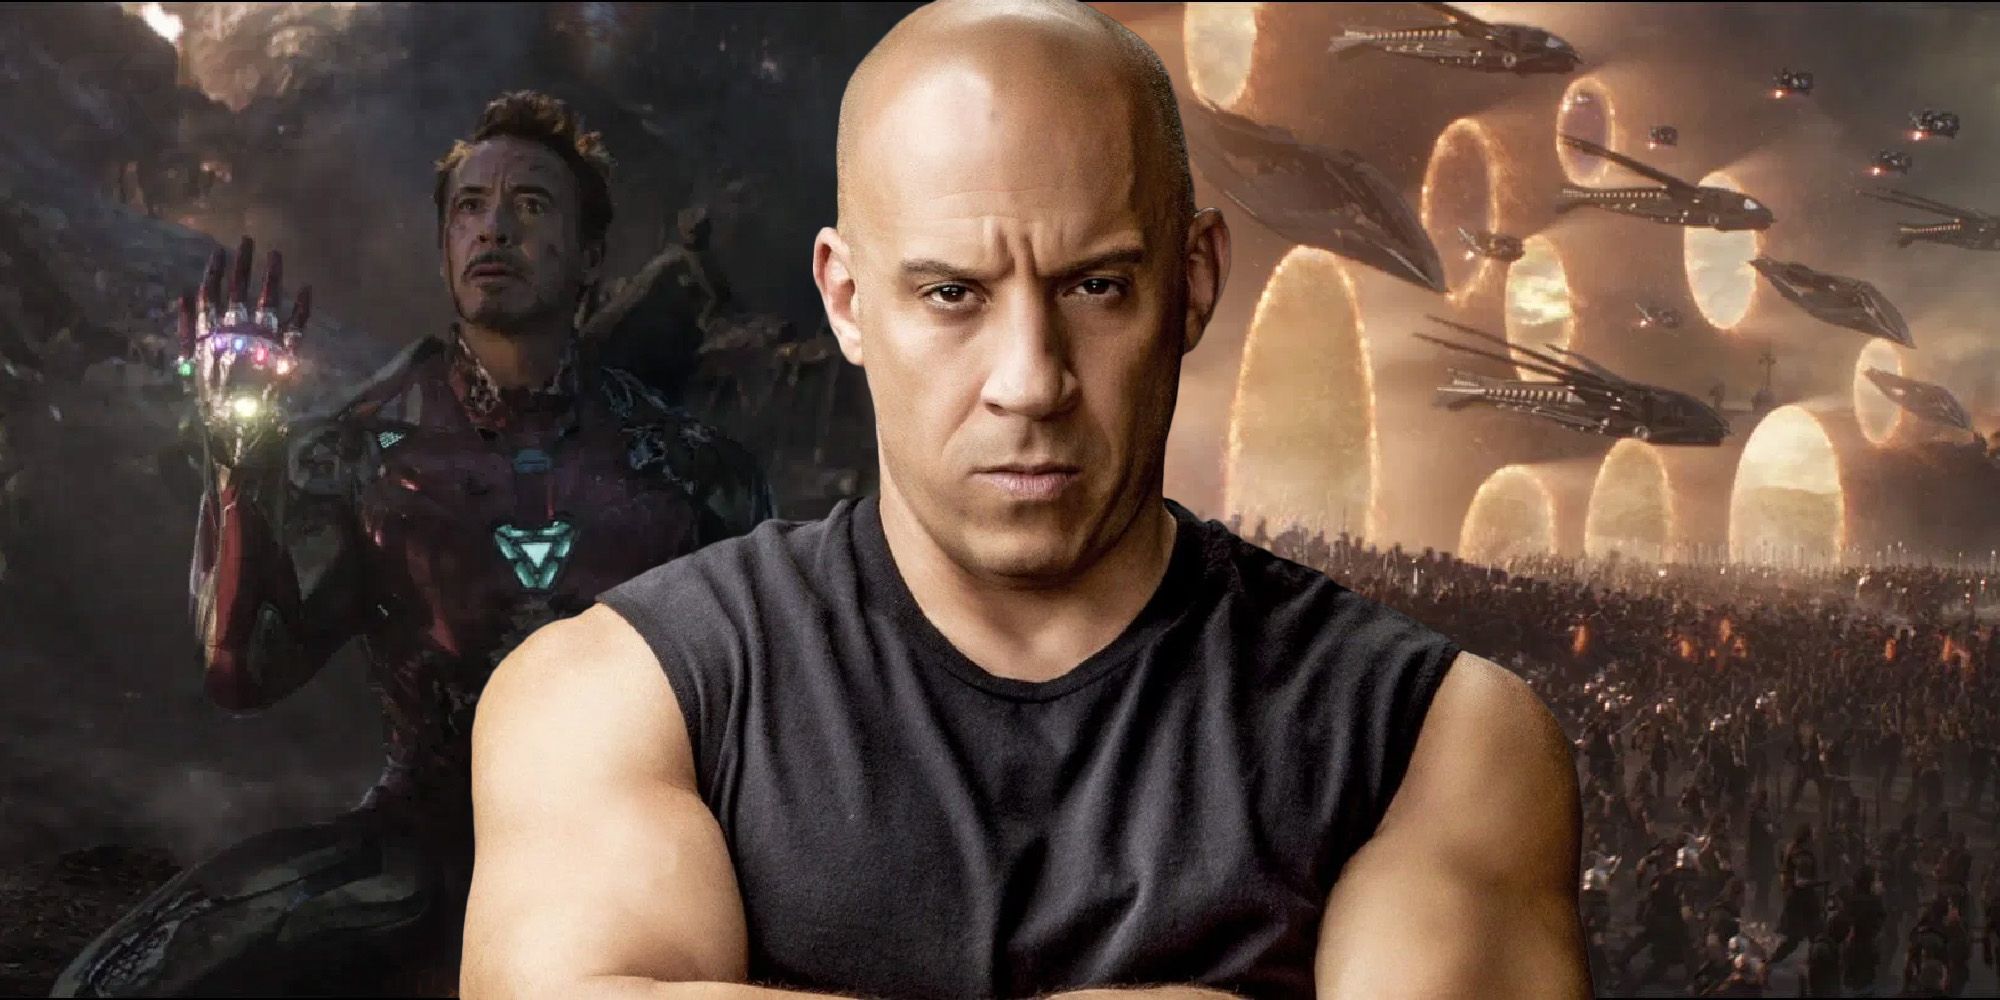 Vin Diesel Dominic Toretto Fast and furious Robert Downey Jr Ironman Avengers Endgame portals scene